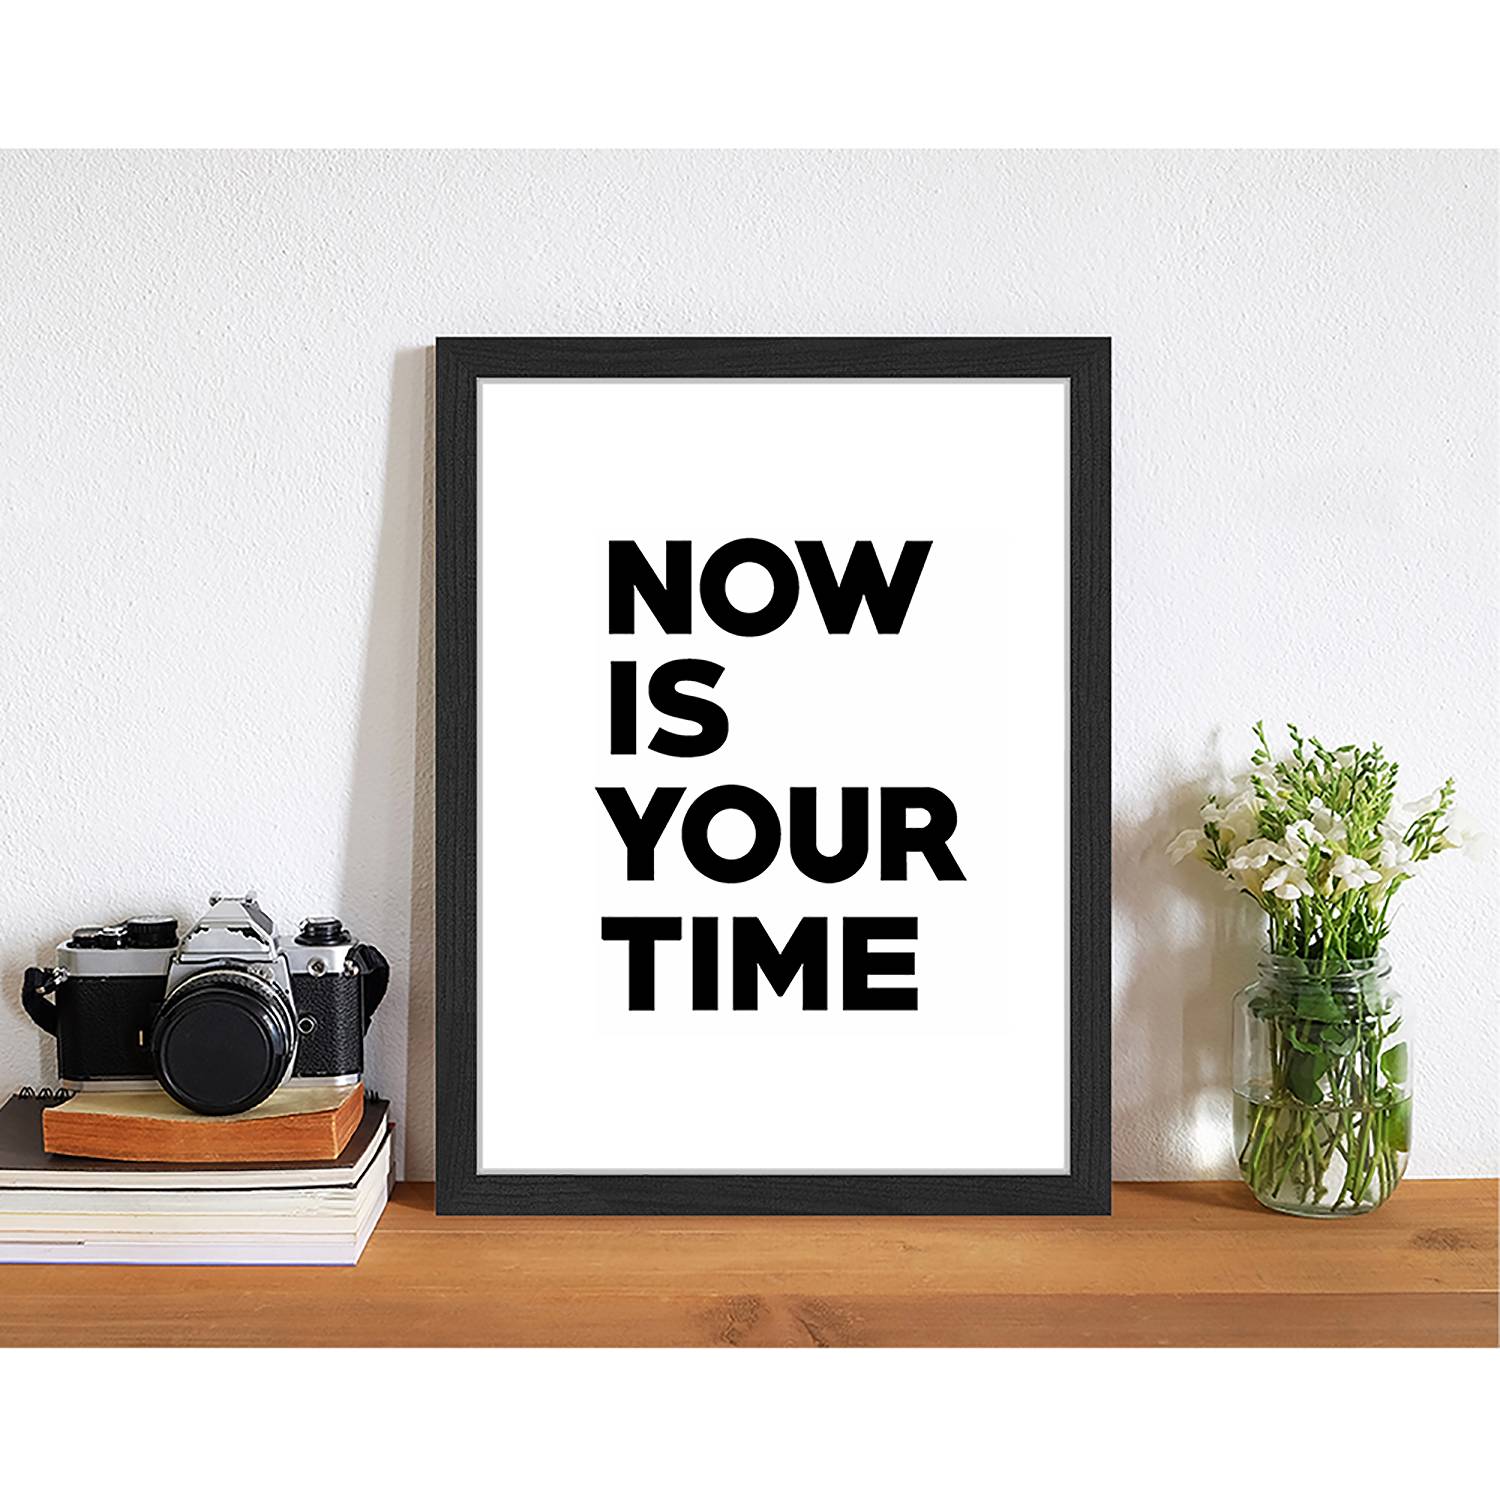 Bild Your time von Any Image